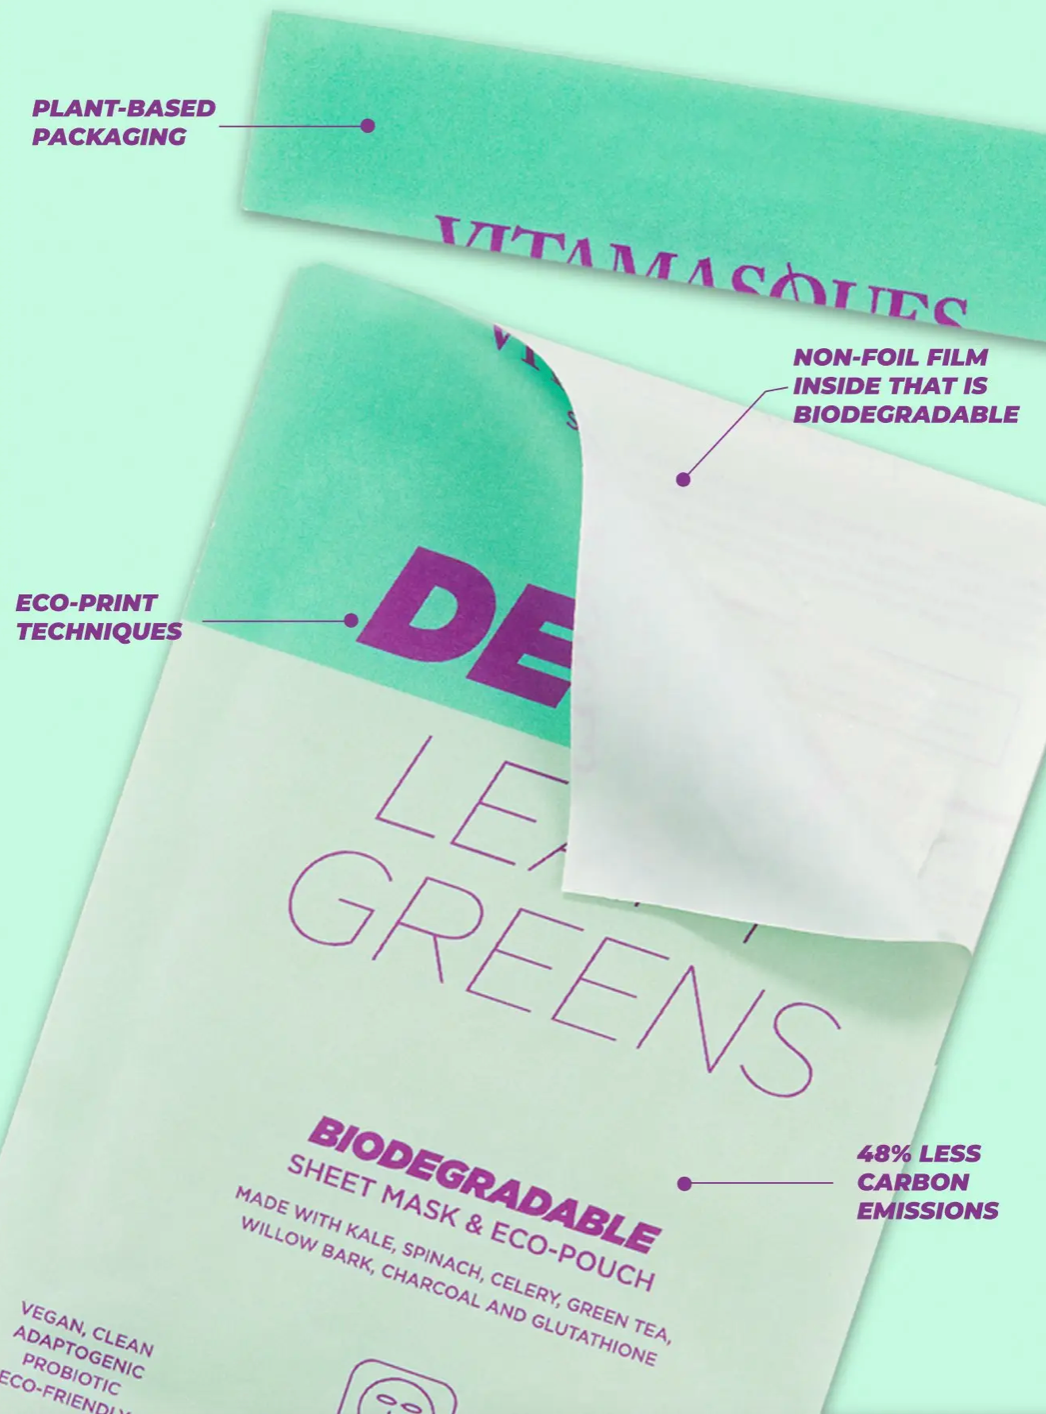 Vitamasques Detox Leafy Greens Biodegradable Sheet Mask